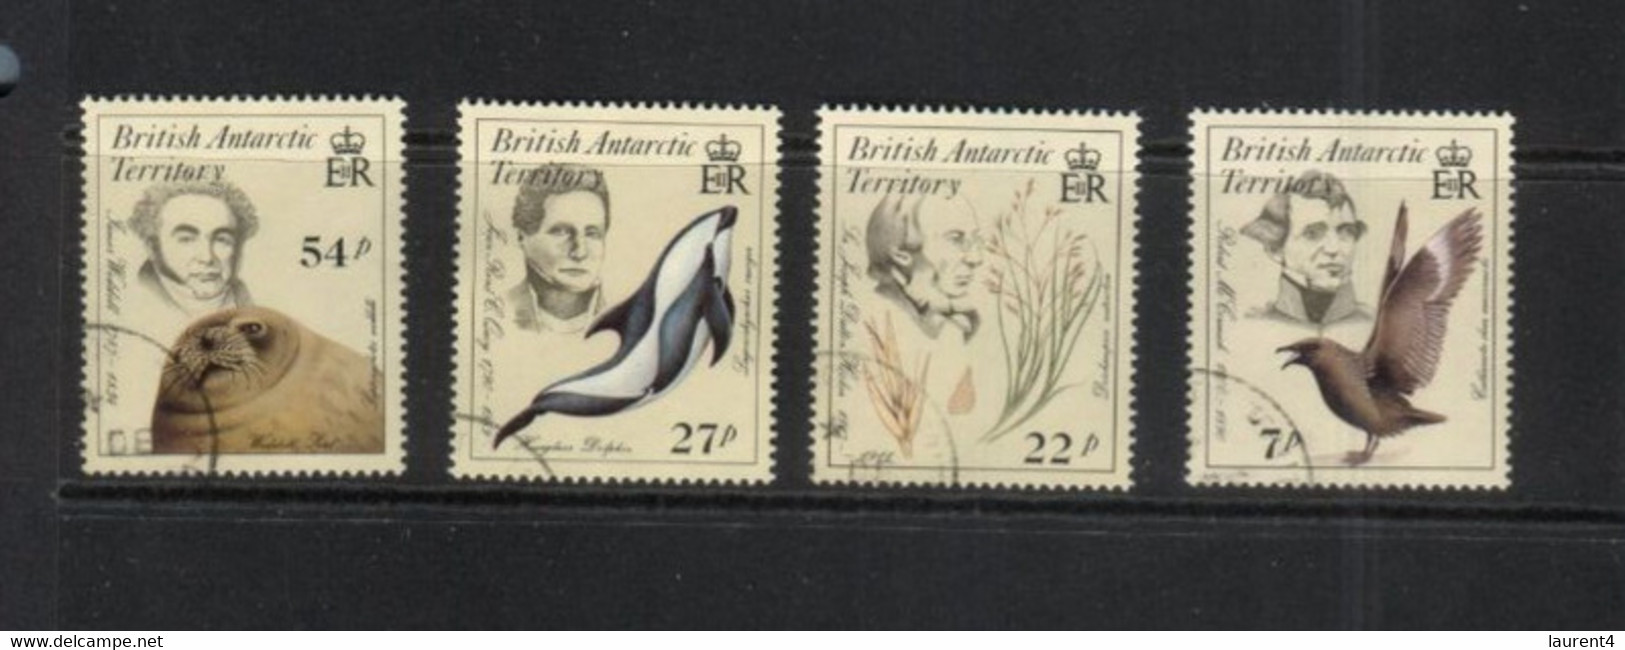 (8-10-2020) British Antarctic Territory - 4 Used Stamps  (Explorer) - Gebruikt